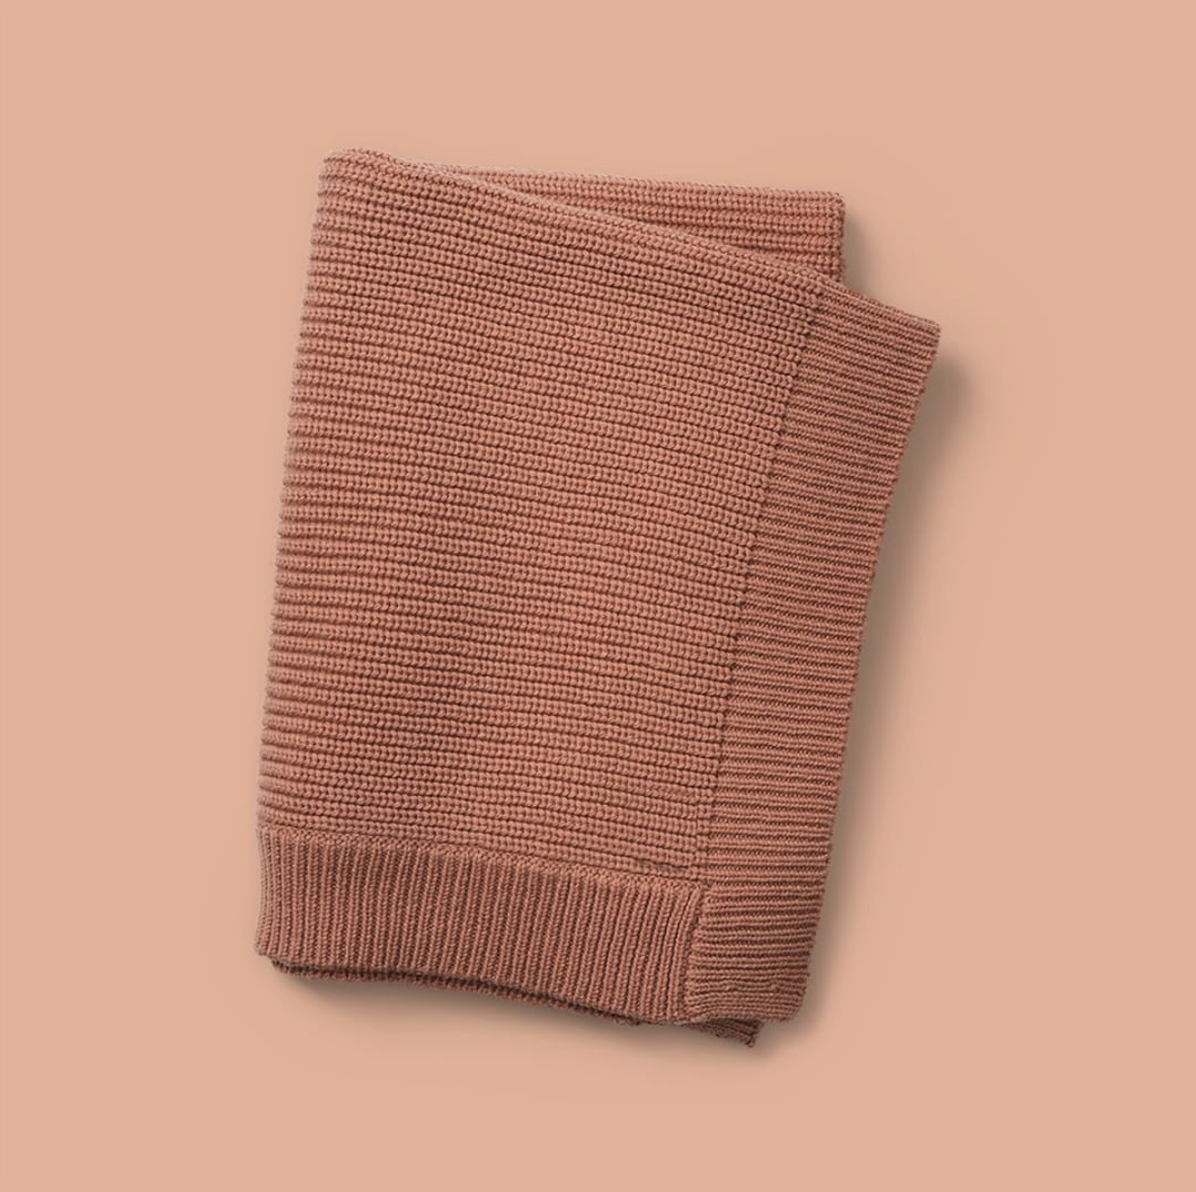   Wool Knitted Blanket faded rose  - Elodie Details 